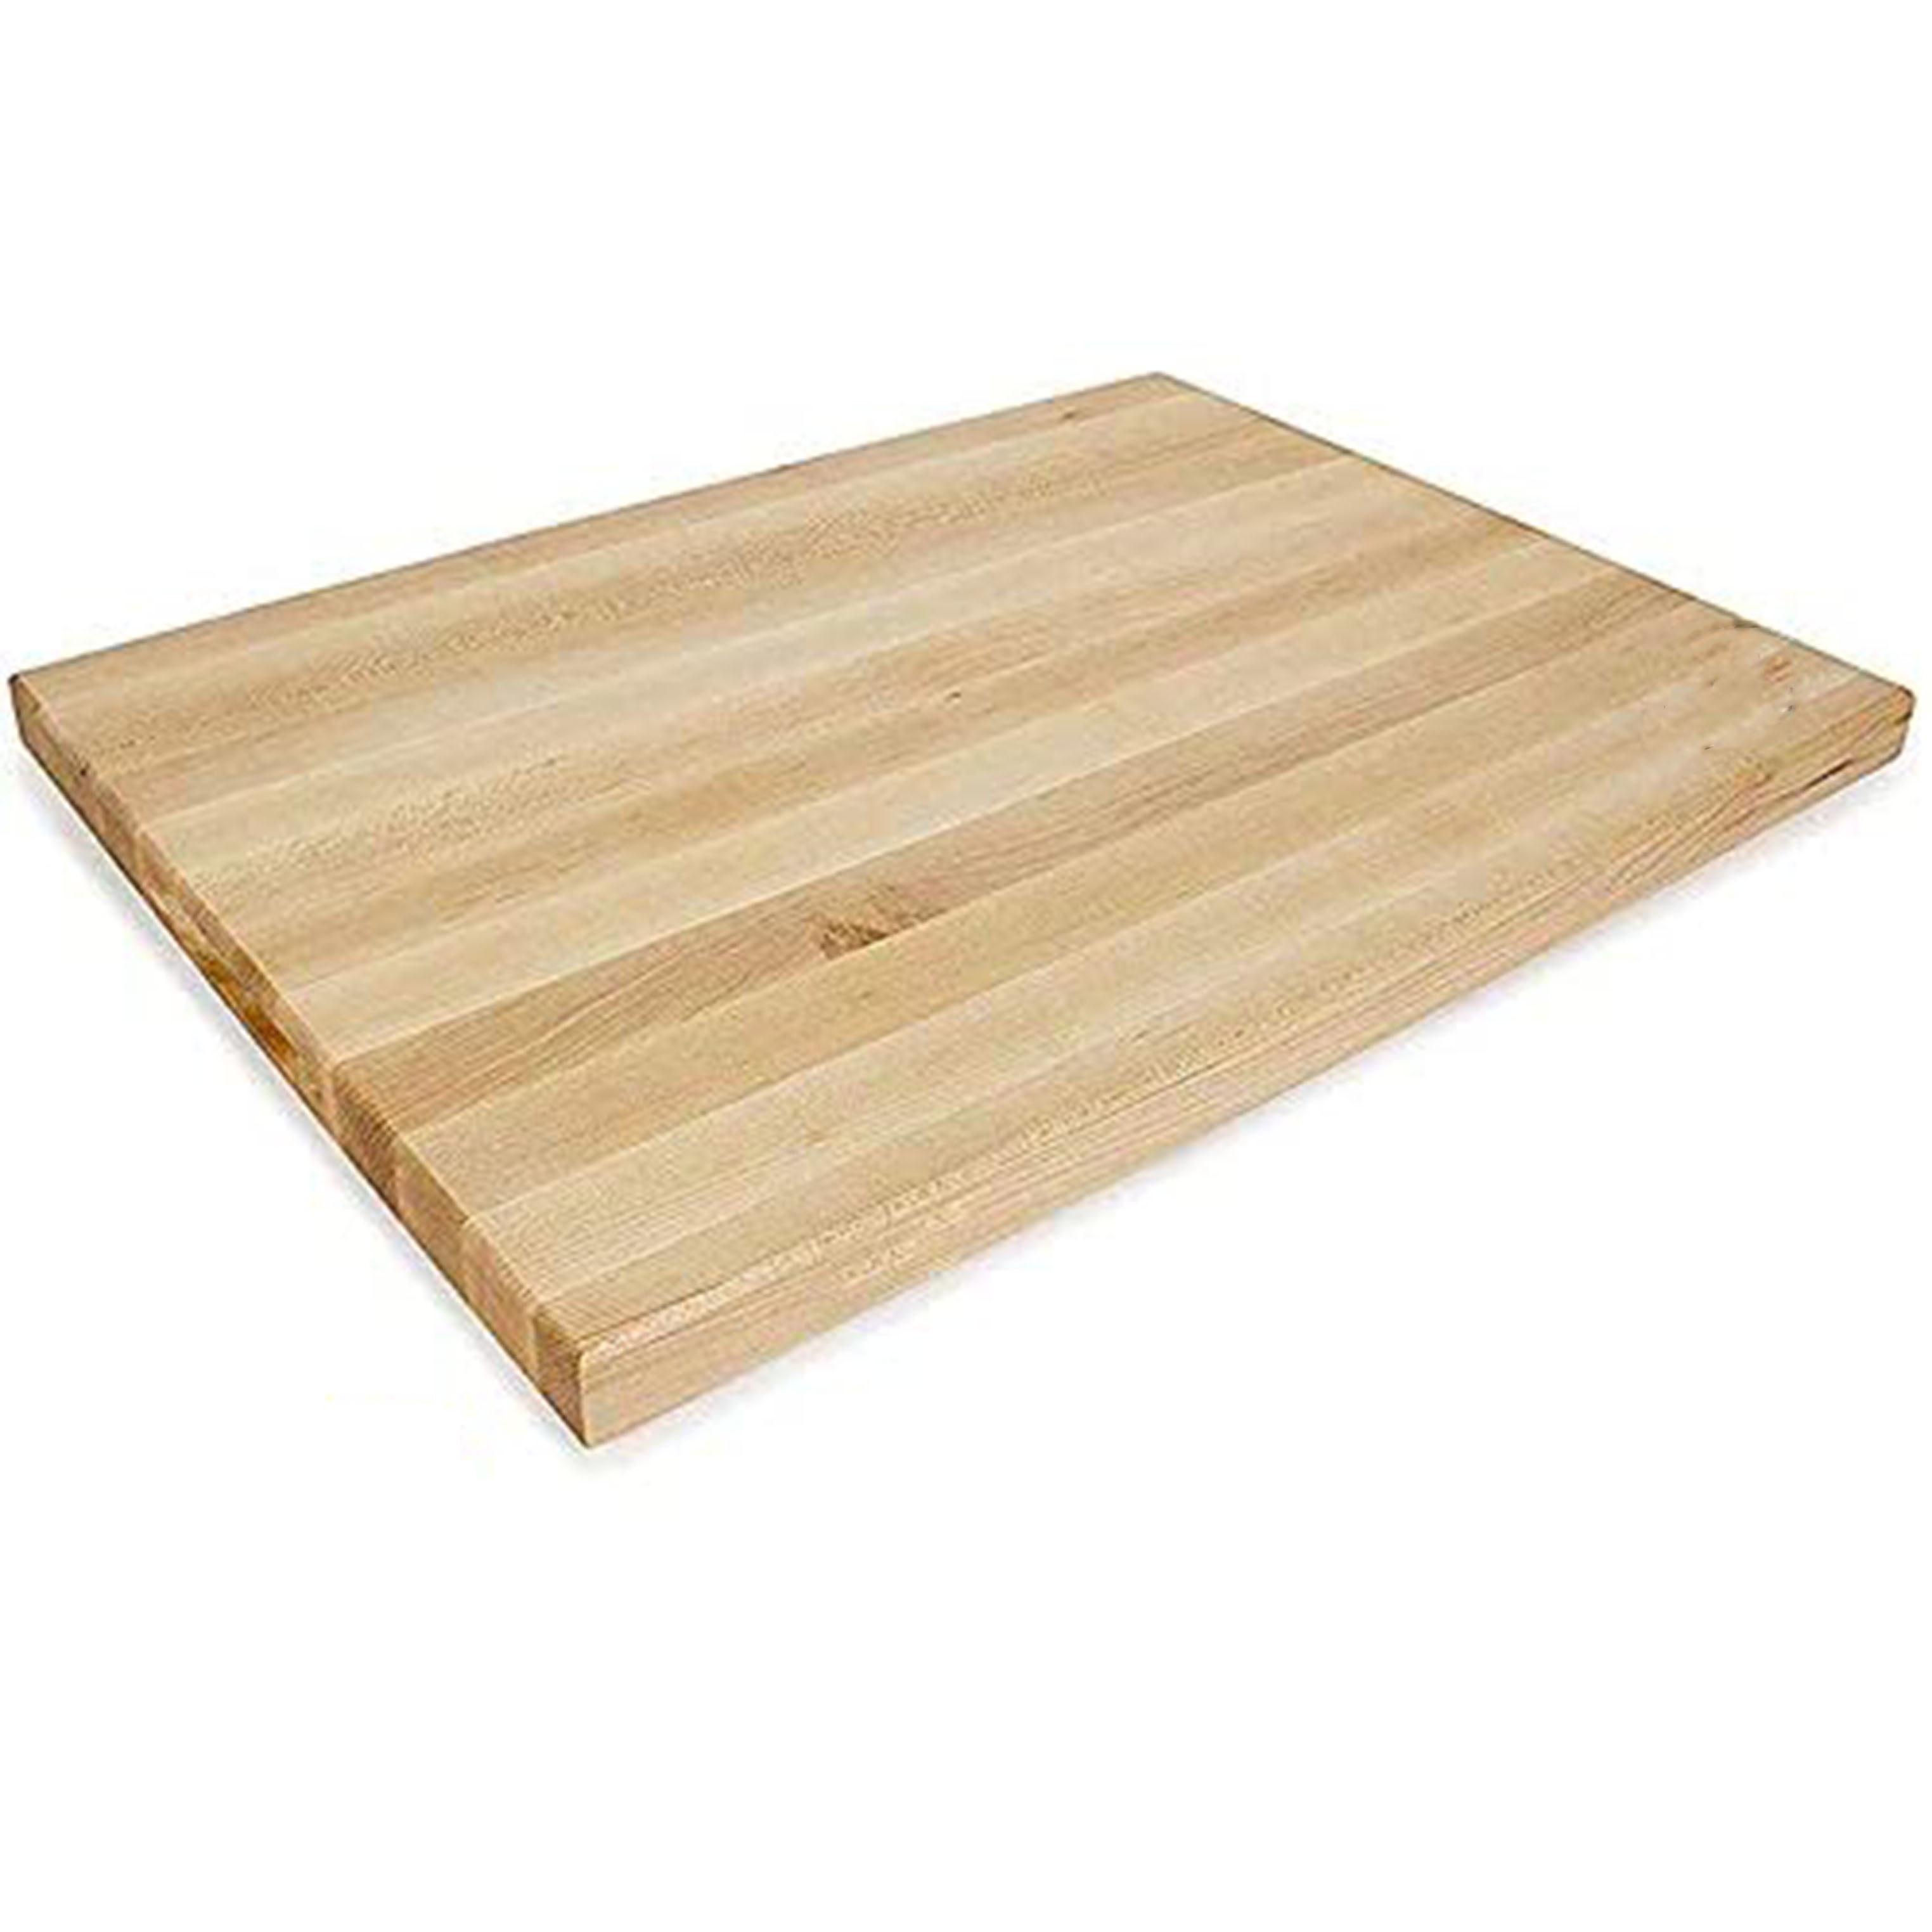 24 cutting boards